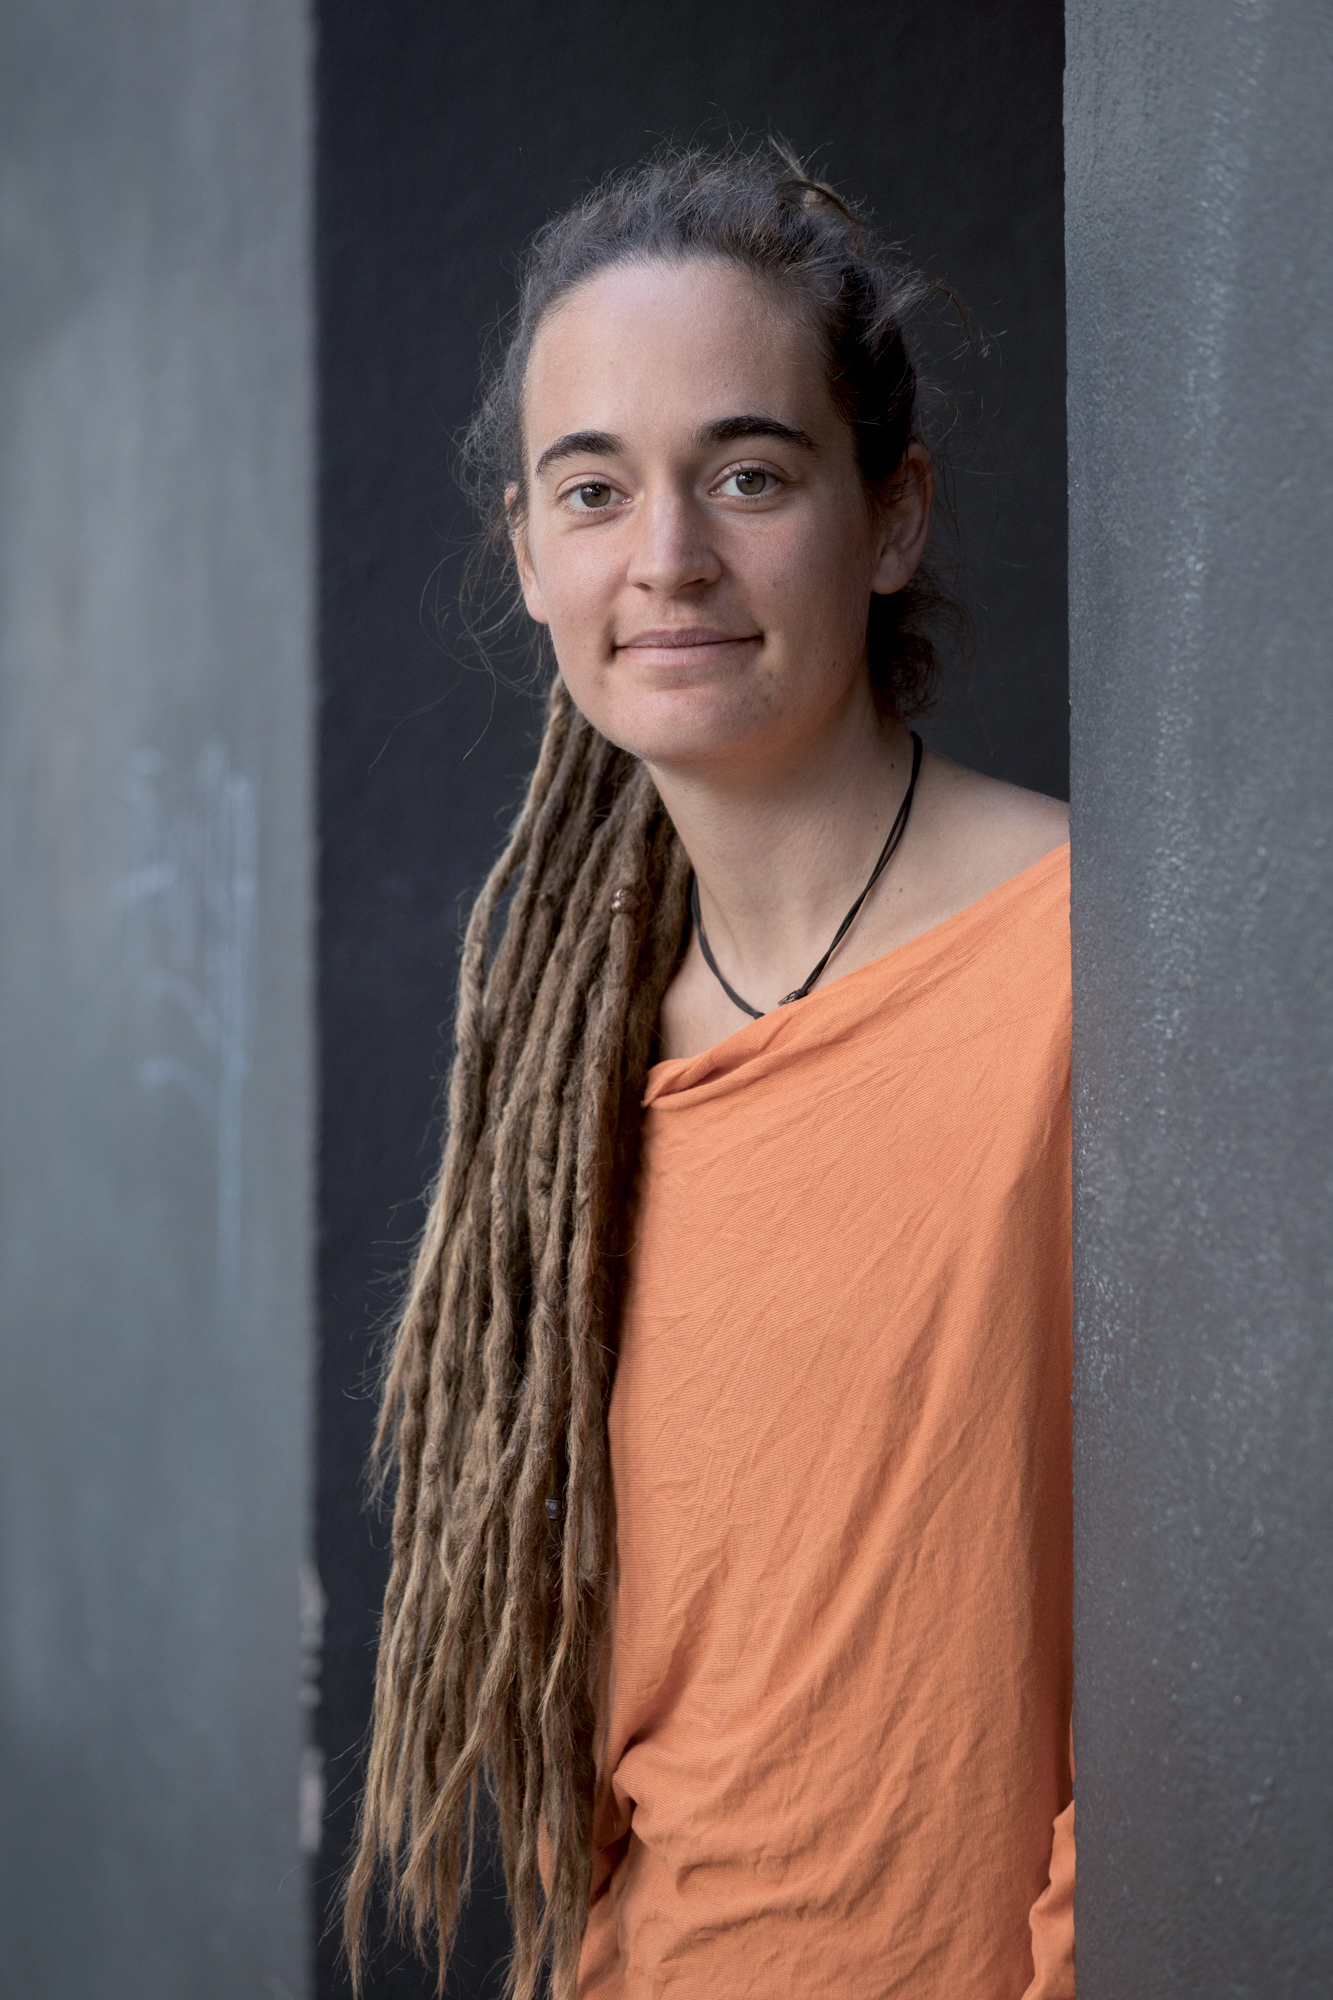 Activist and environnemental manager Carola Rackete (2020, Le monde)